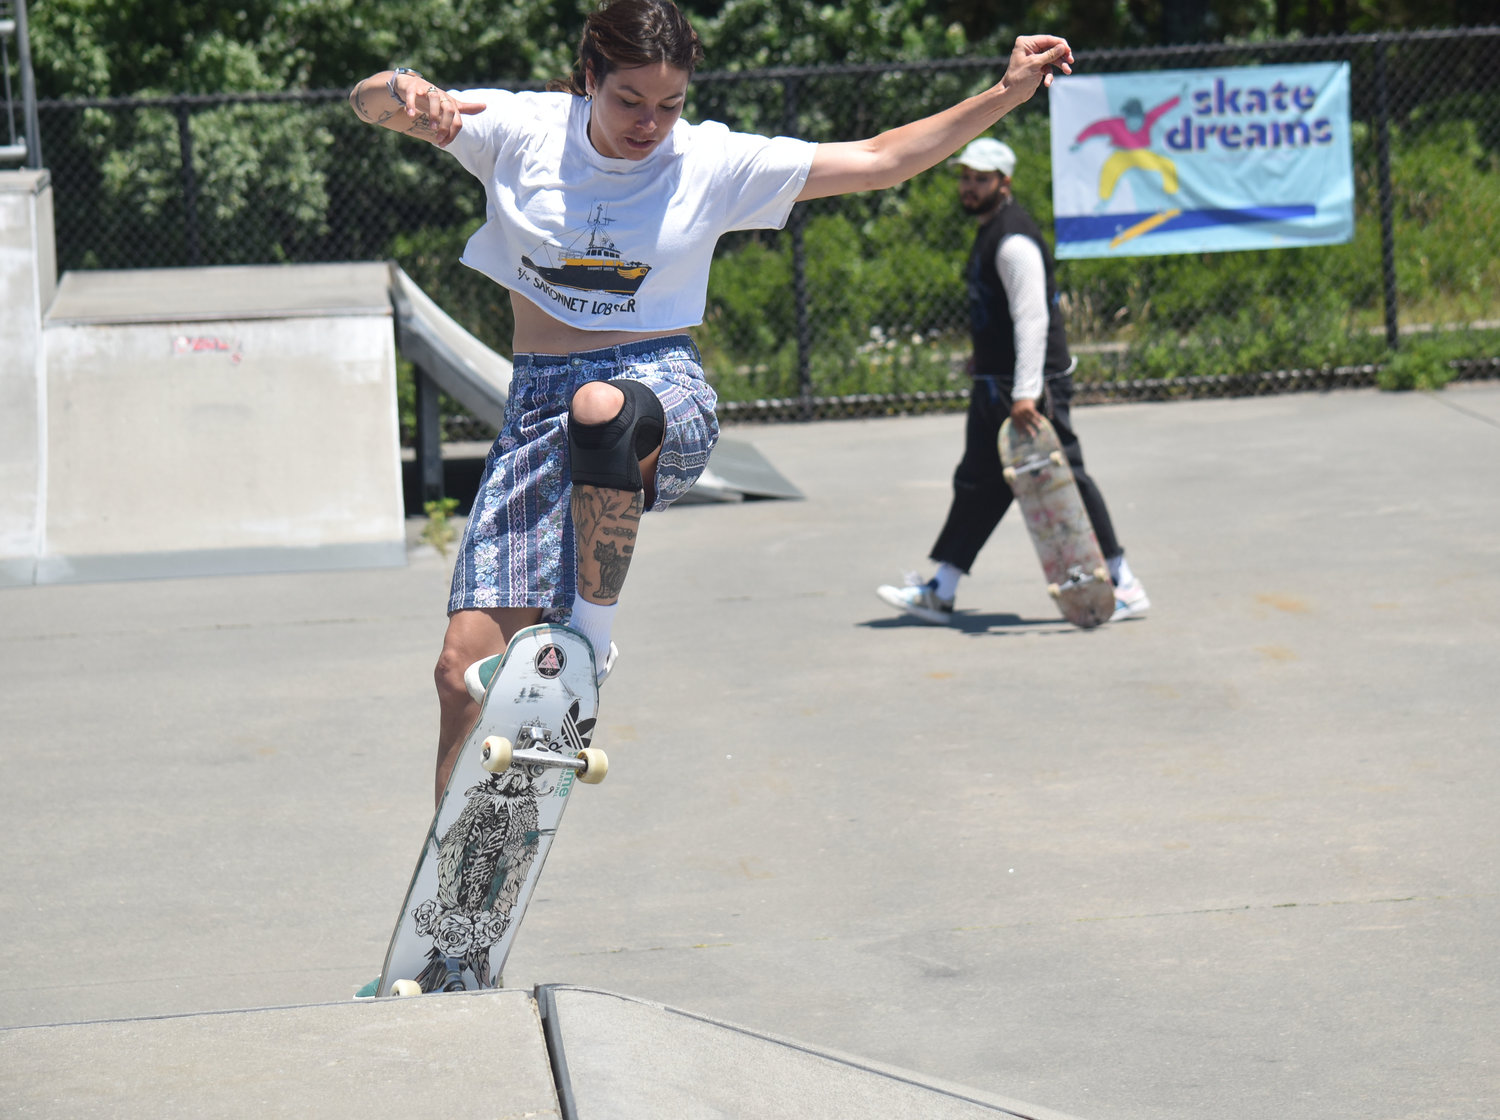 Professional skateboard Nora Valconcellos performed several tricks during Saturday's Nantucket Film Festival Skate Jam at Nantucket skate park.